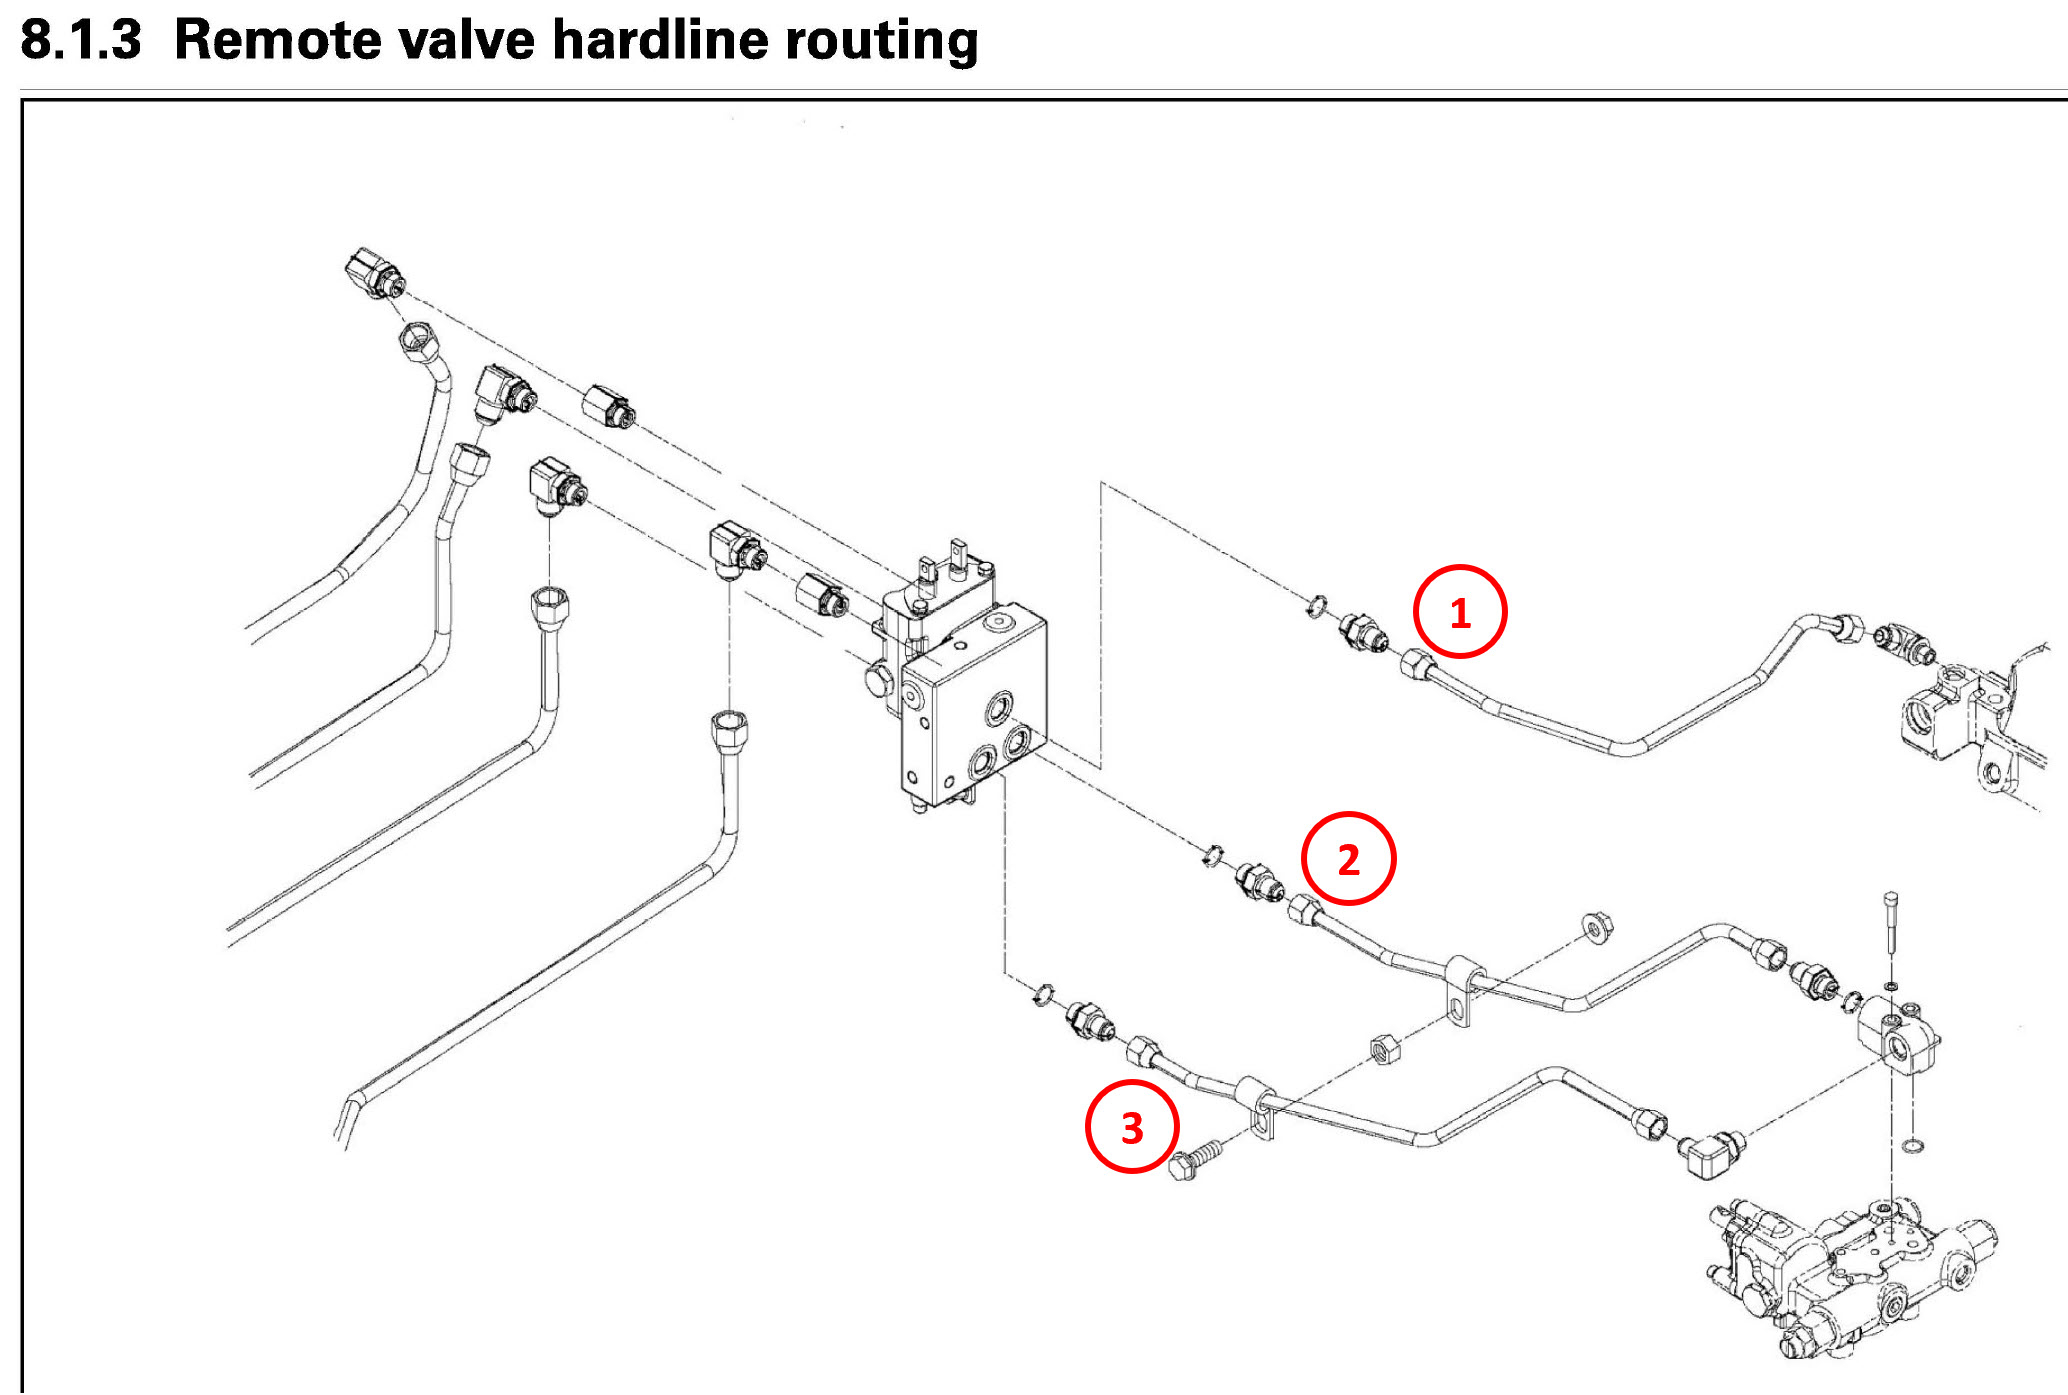 Remote Valve Hardline Routing - marked.jpg